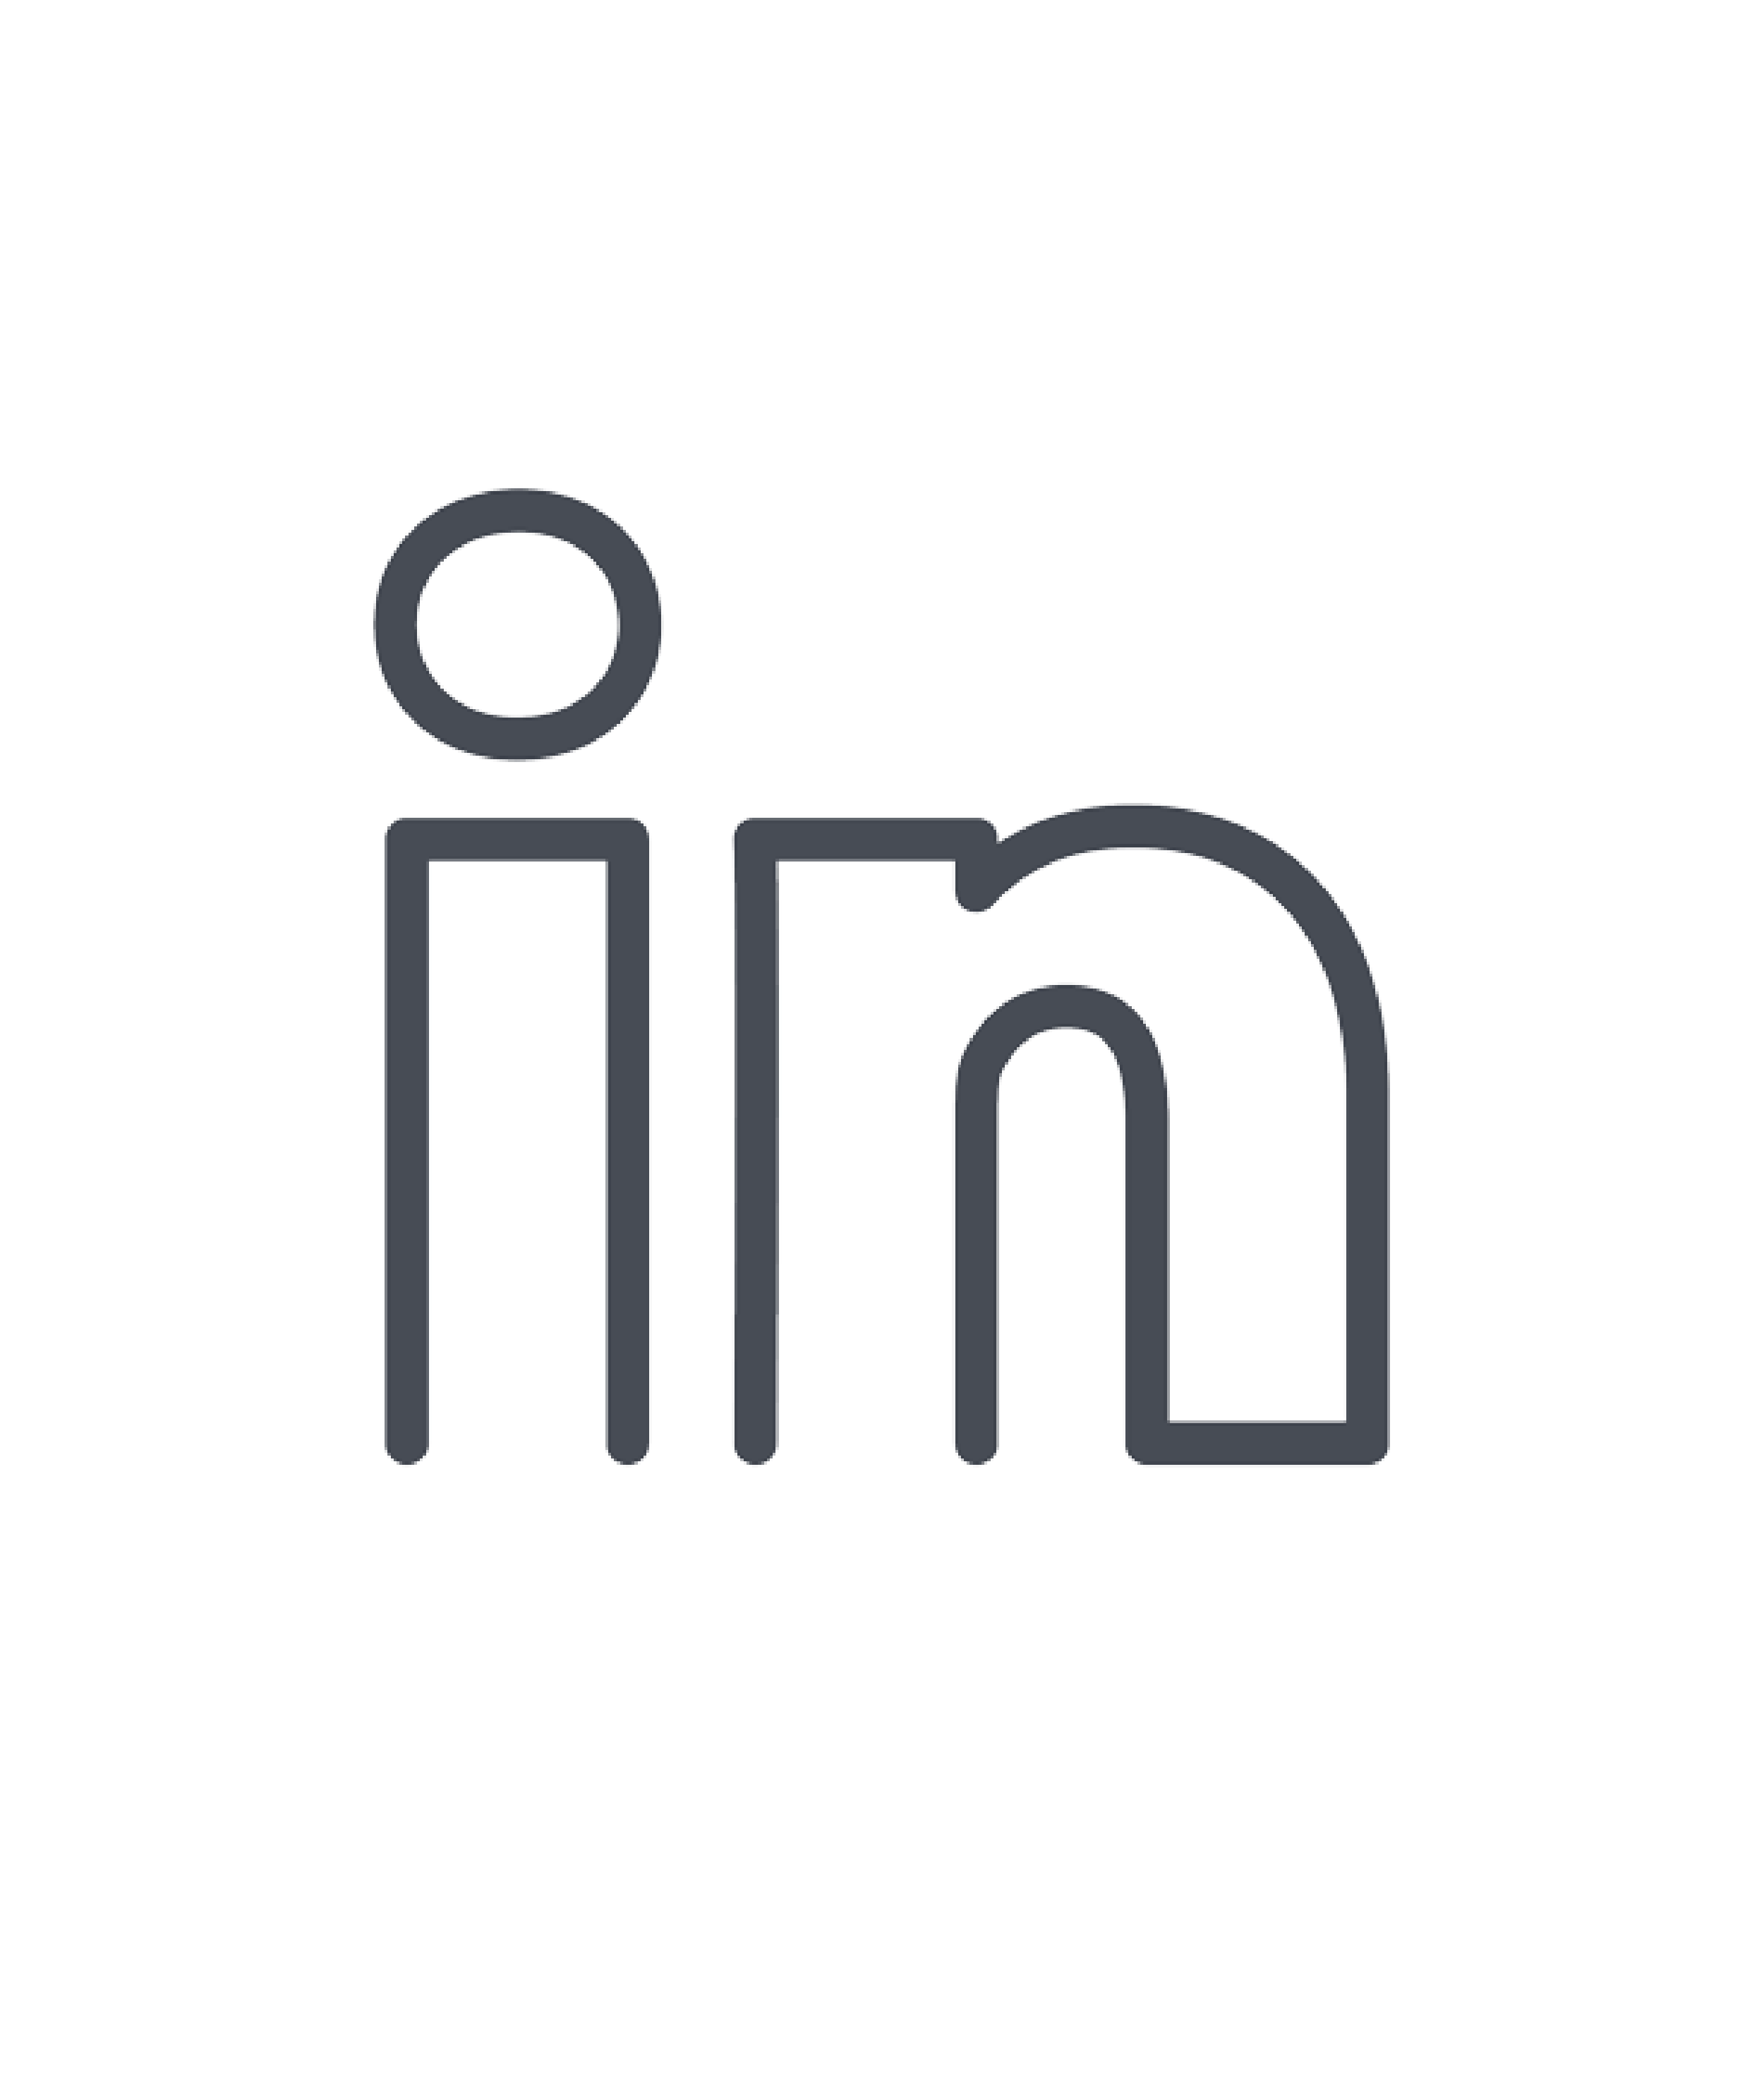 New LinkedIn Logo - The new marketing CV